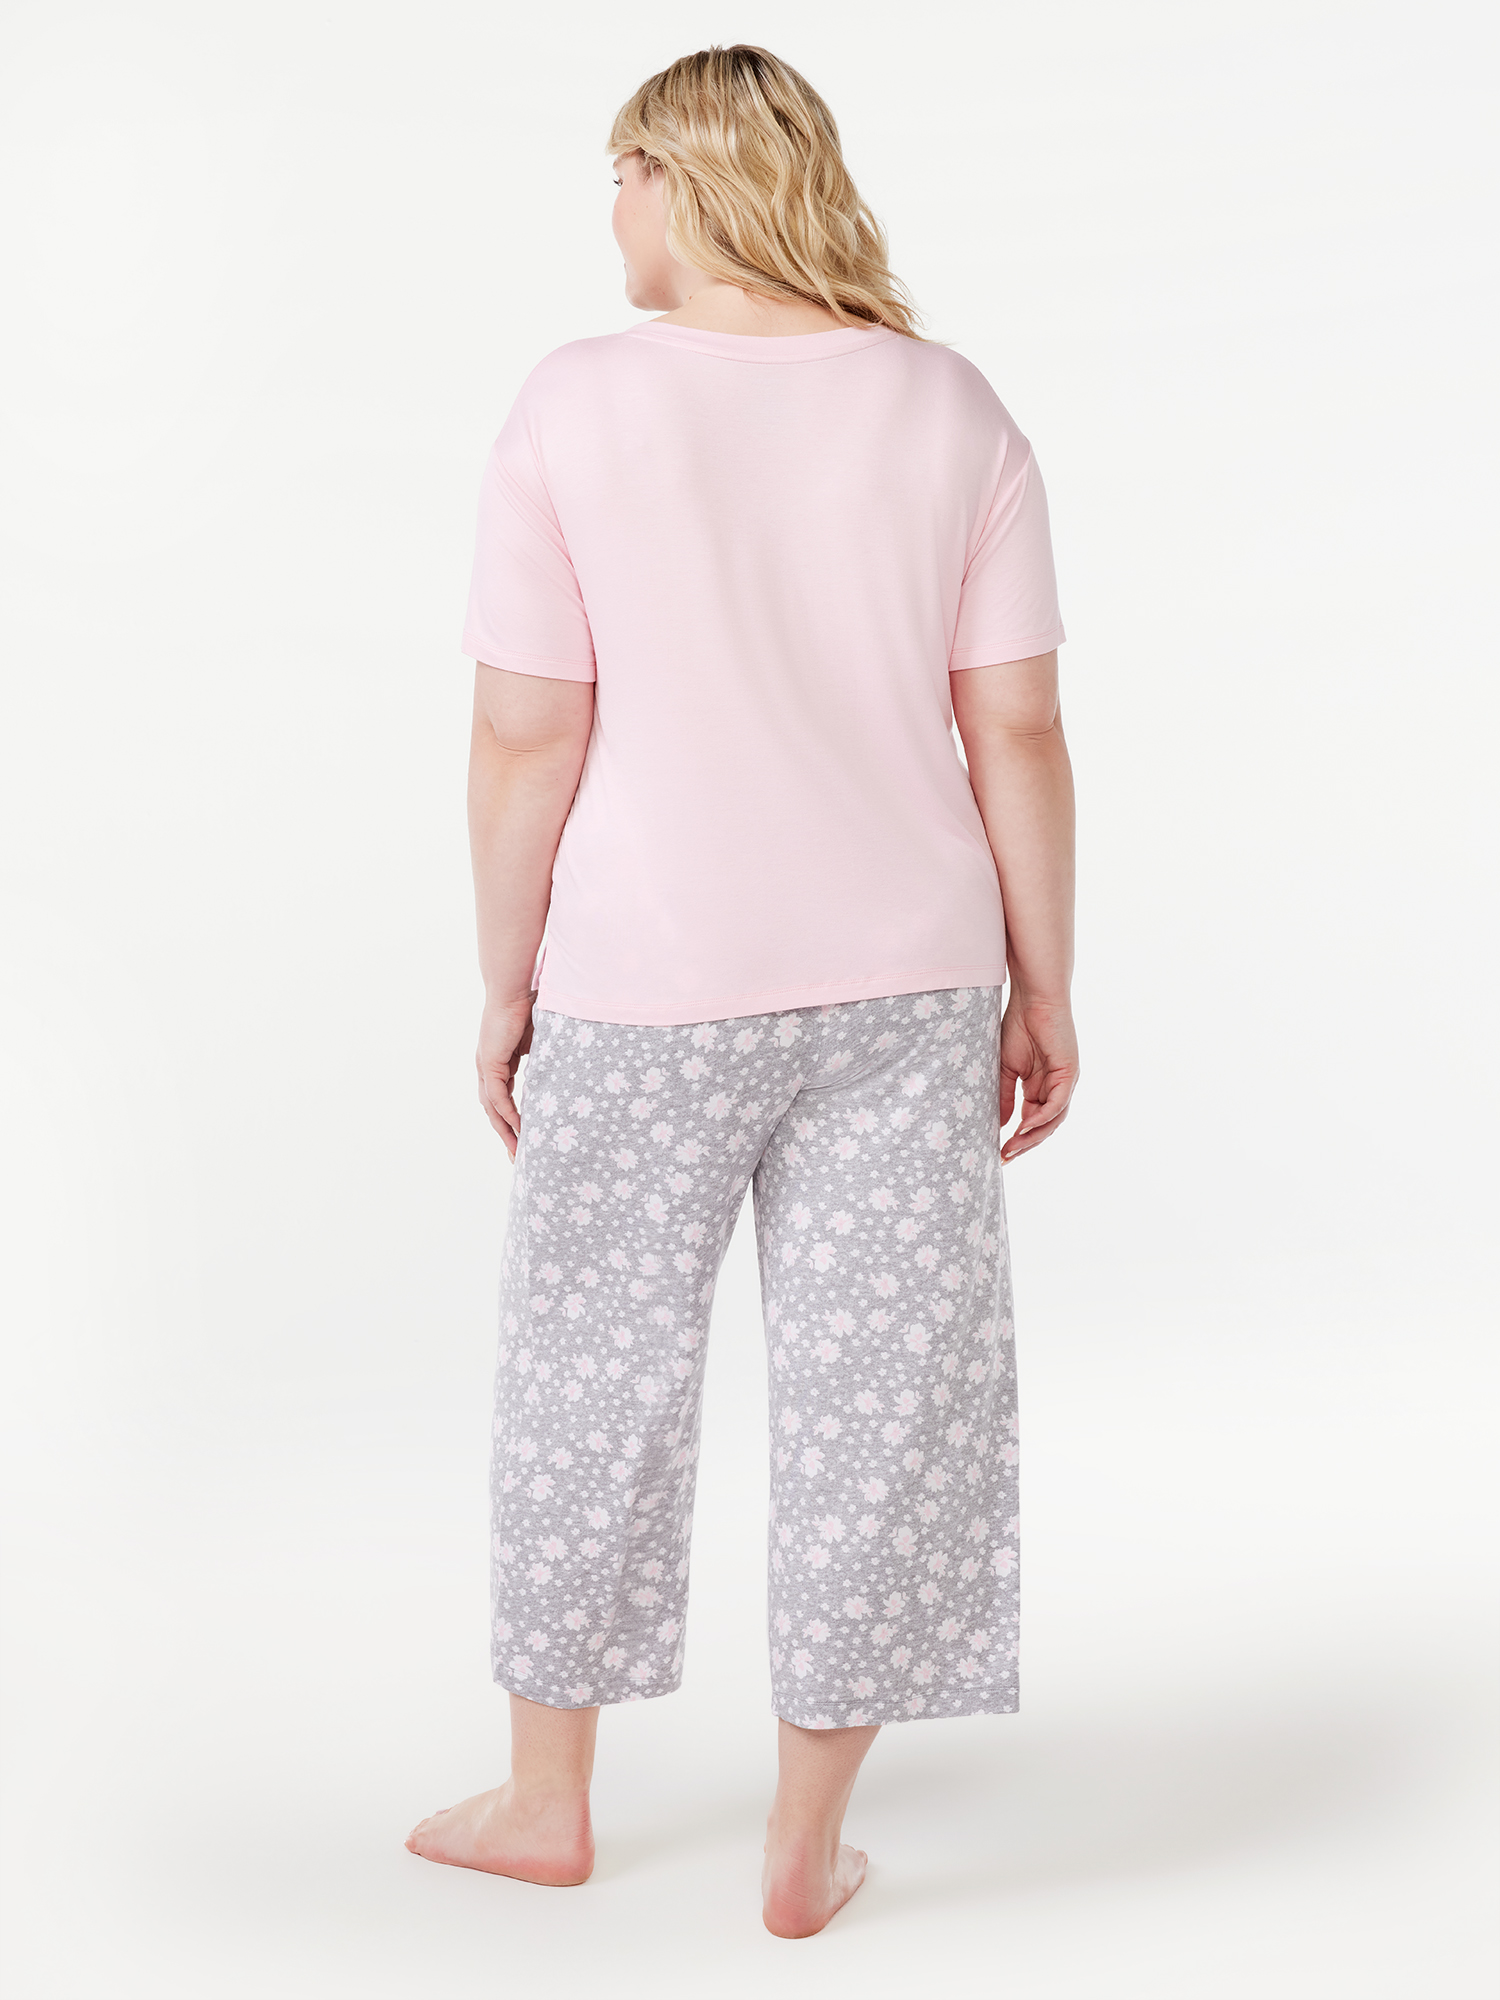 Joyspun Women's V-Neck Sleep T-Shirt, Sizes S to 3X - image 2 of 5